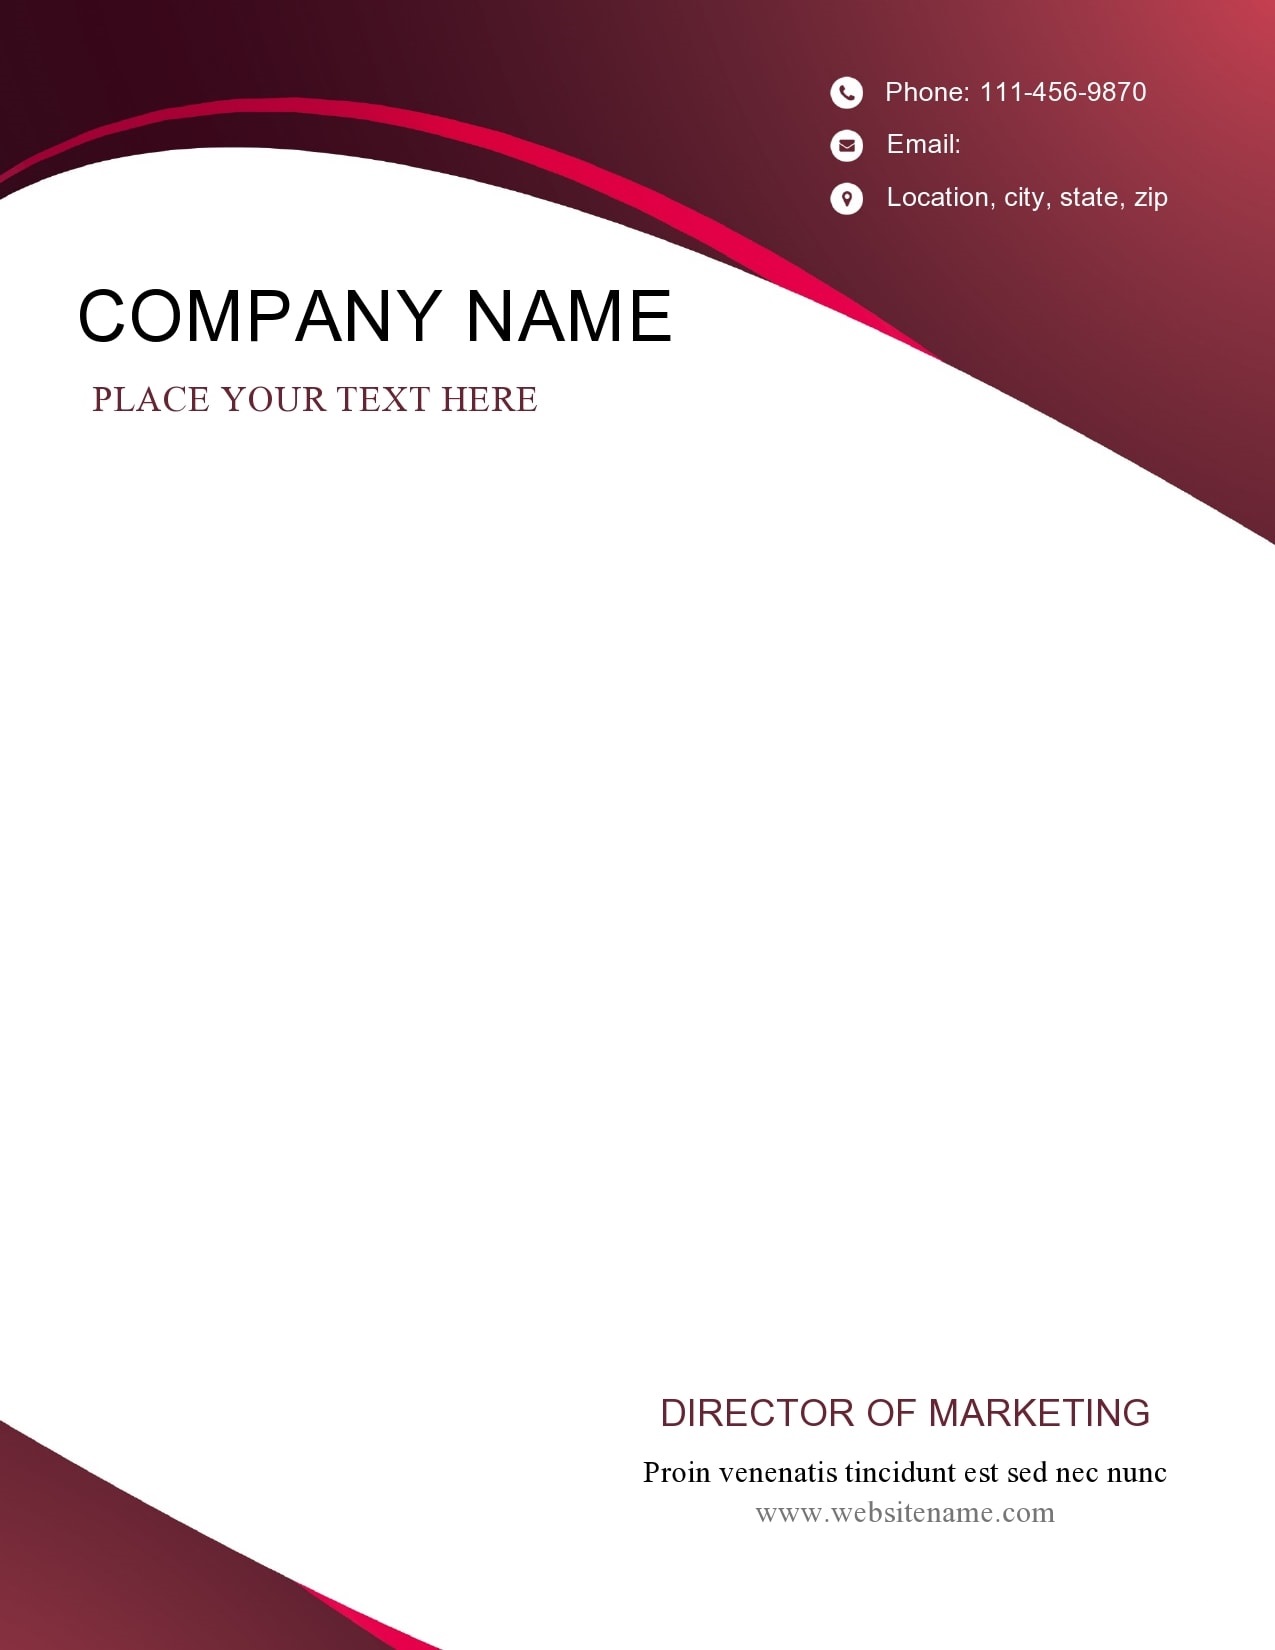 Company Letterhead Examples